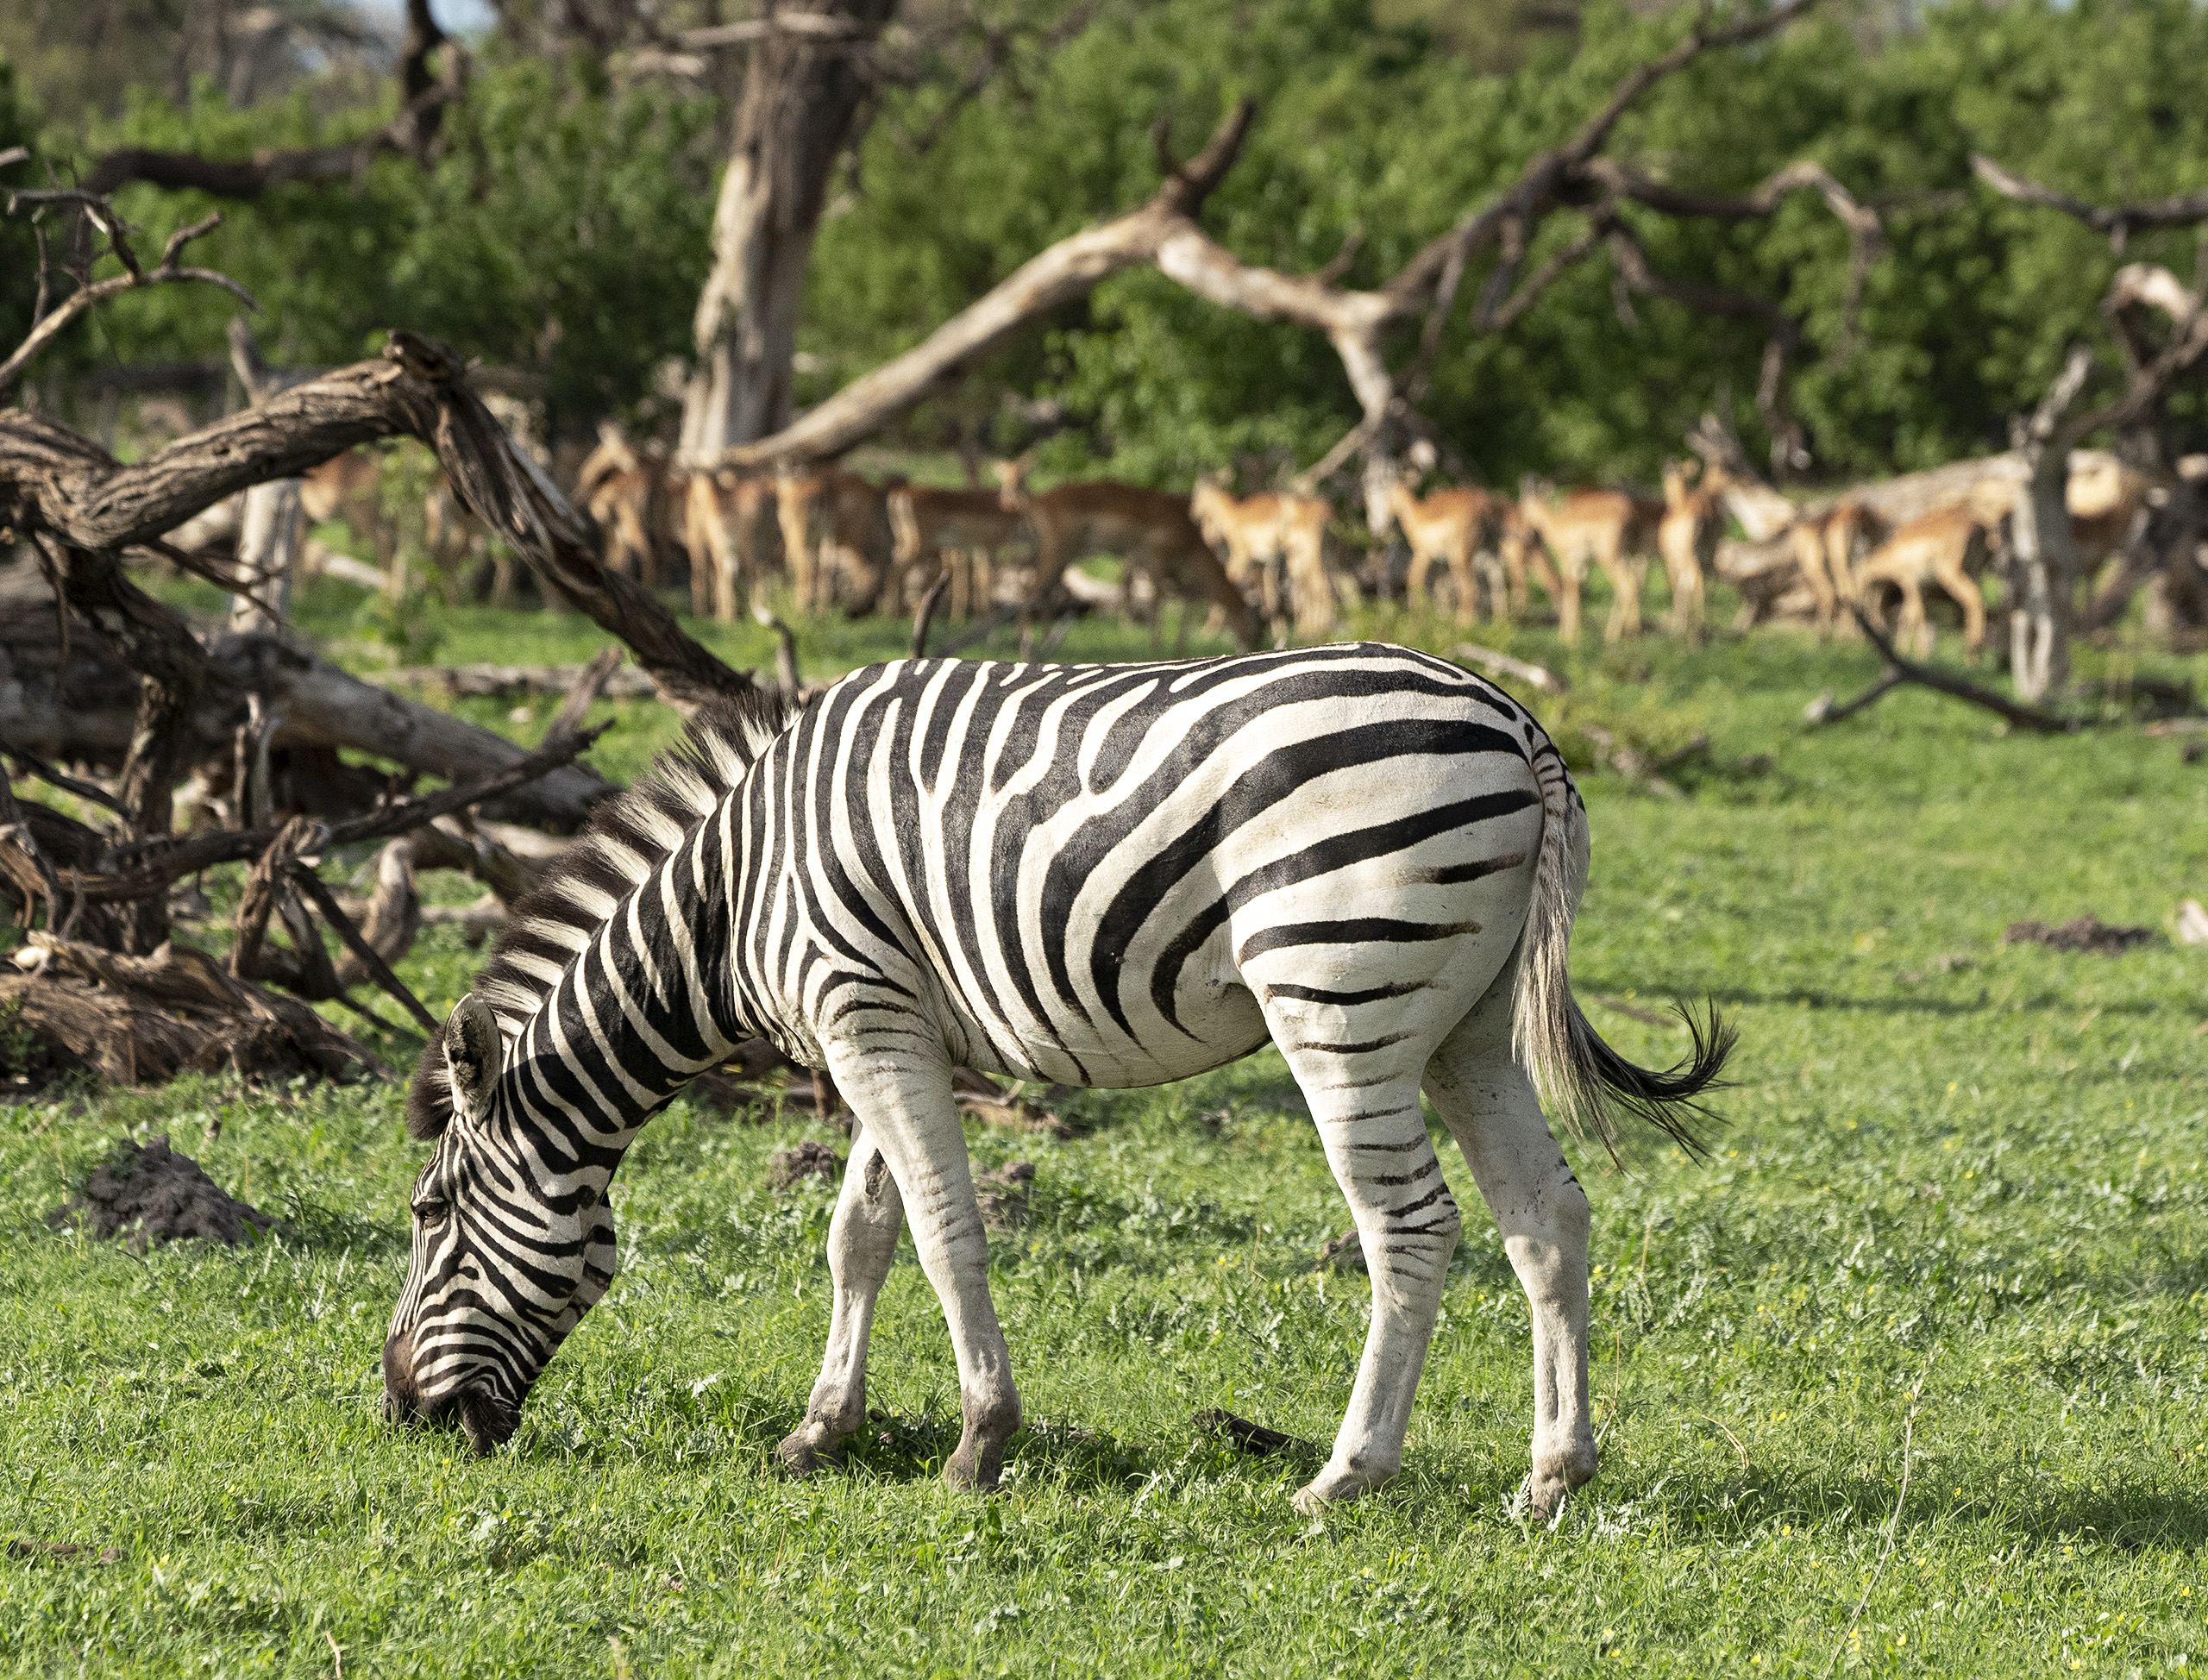 Zebra and impalas